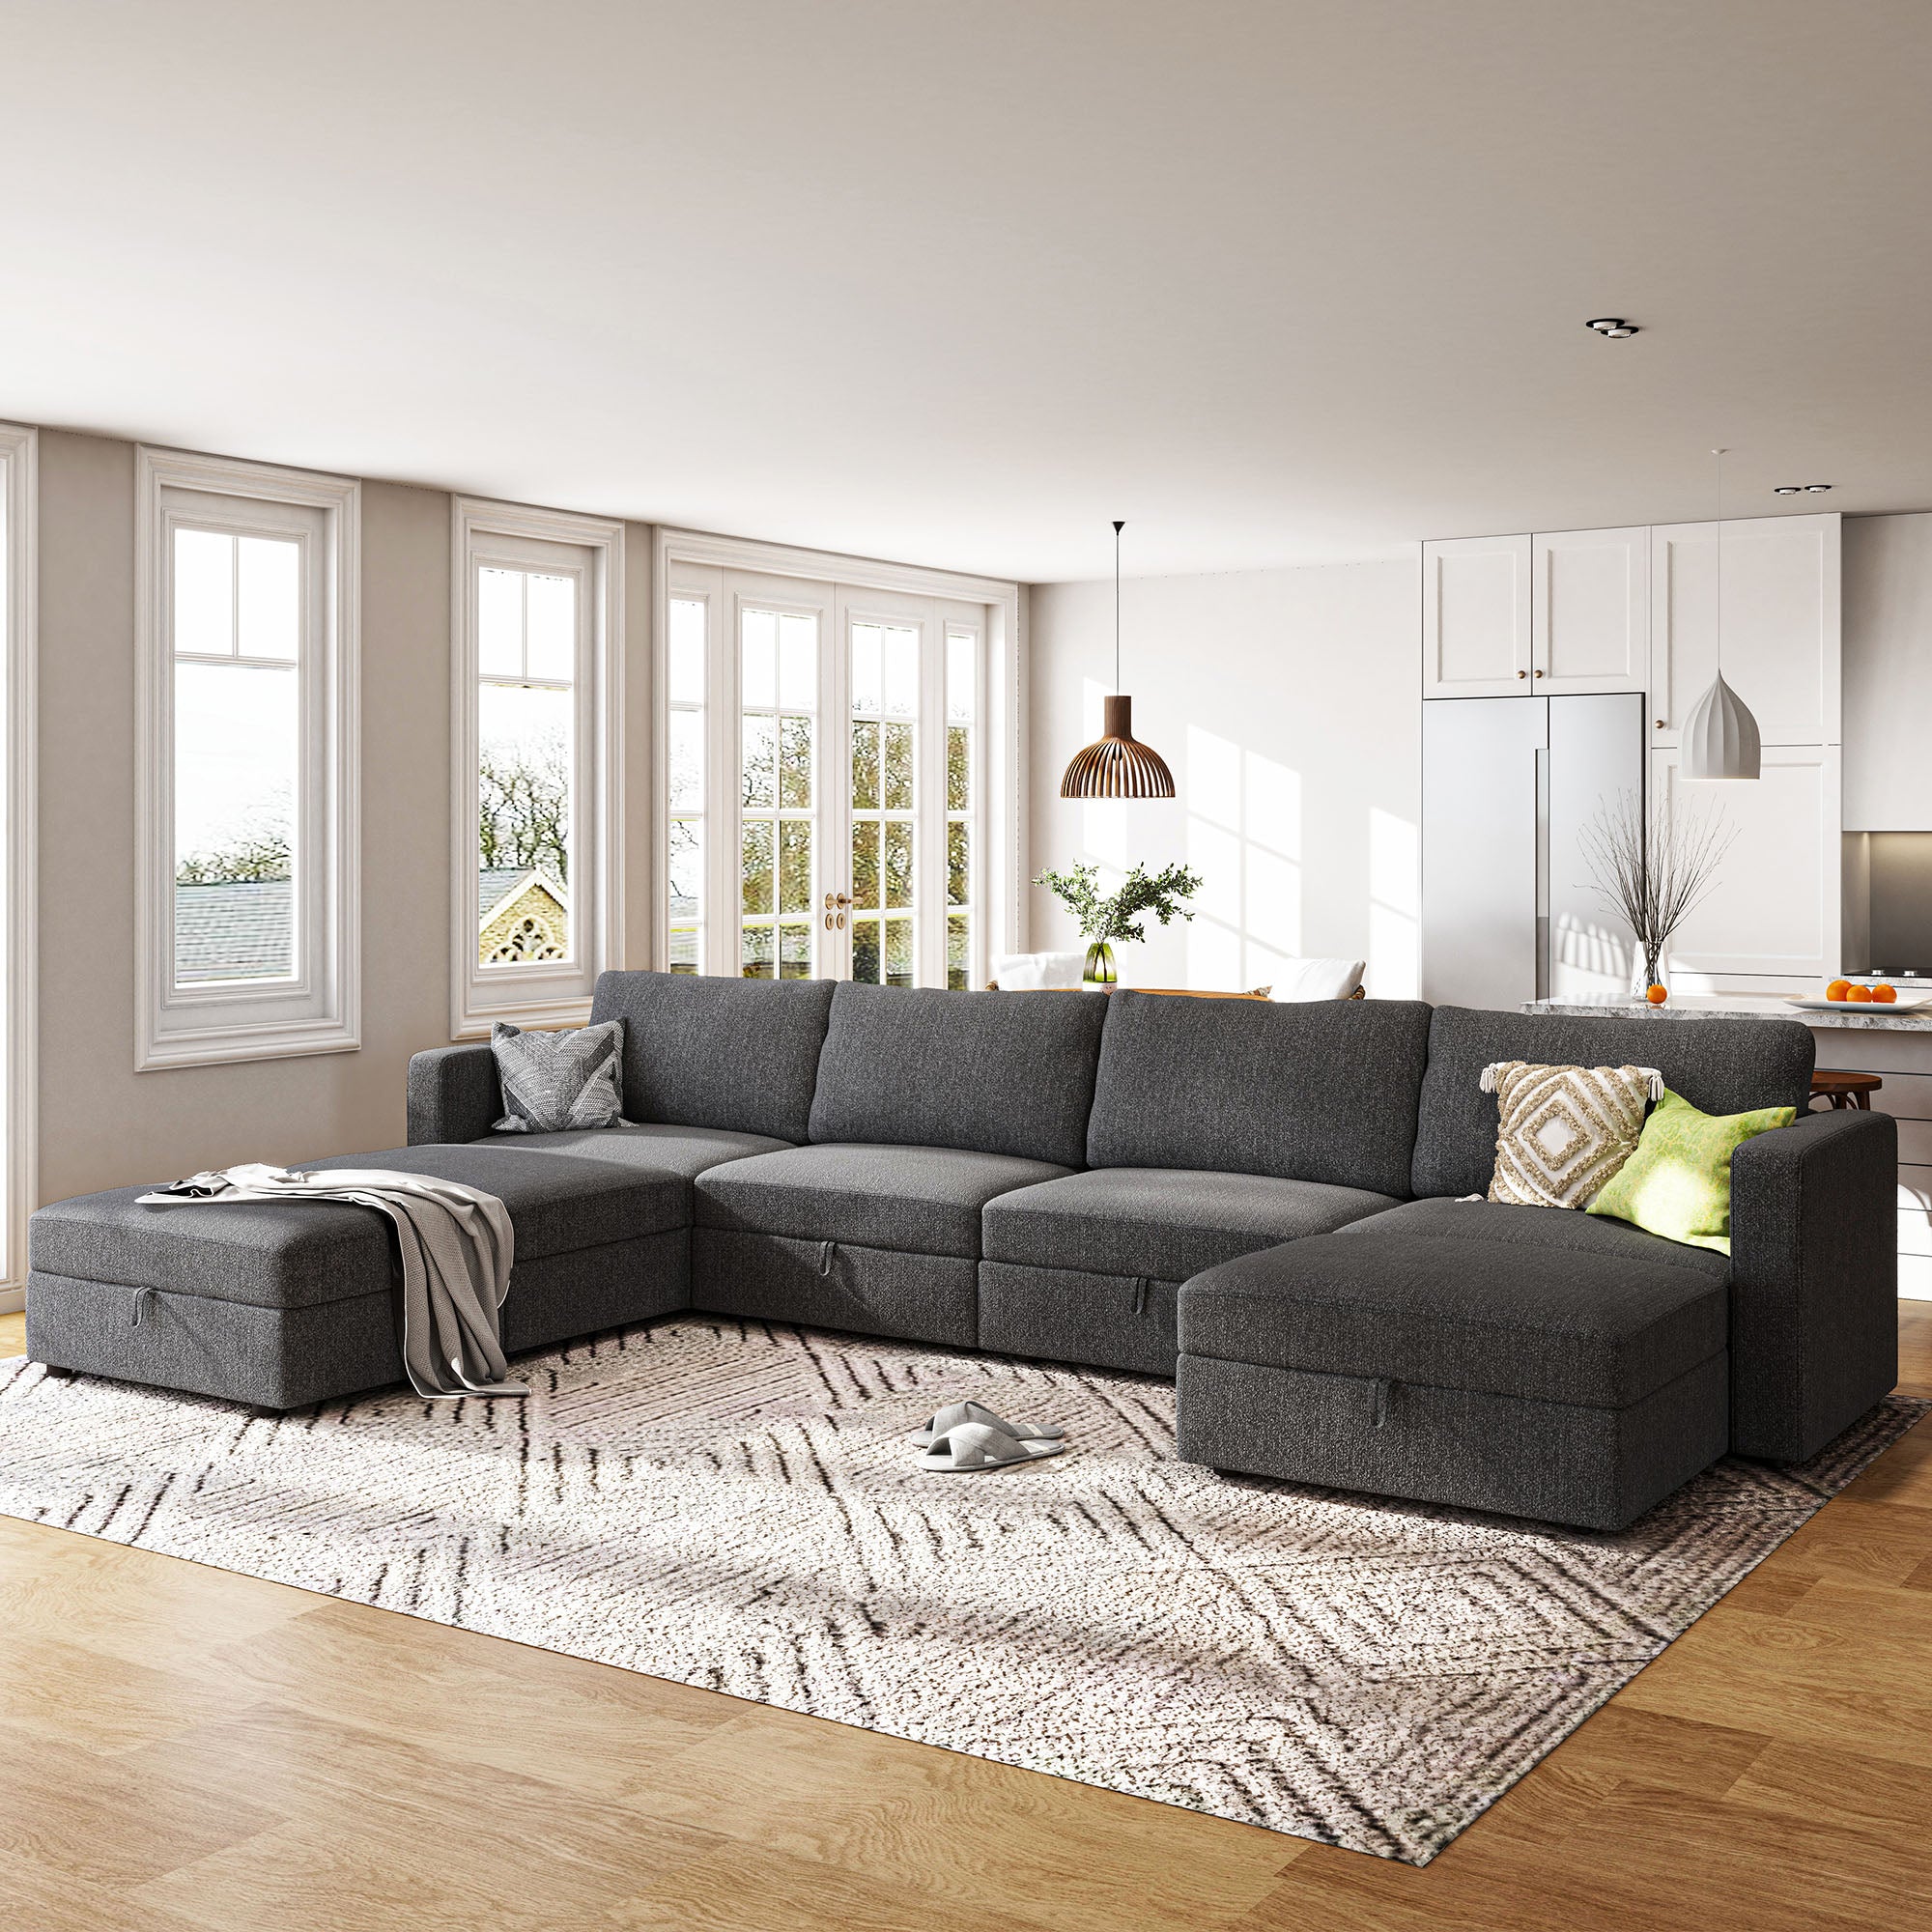 HONBAY Polyester Comfortable Widened Seat Modular Sectional Sofa in Dark Grey